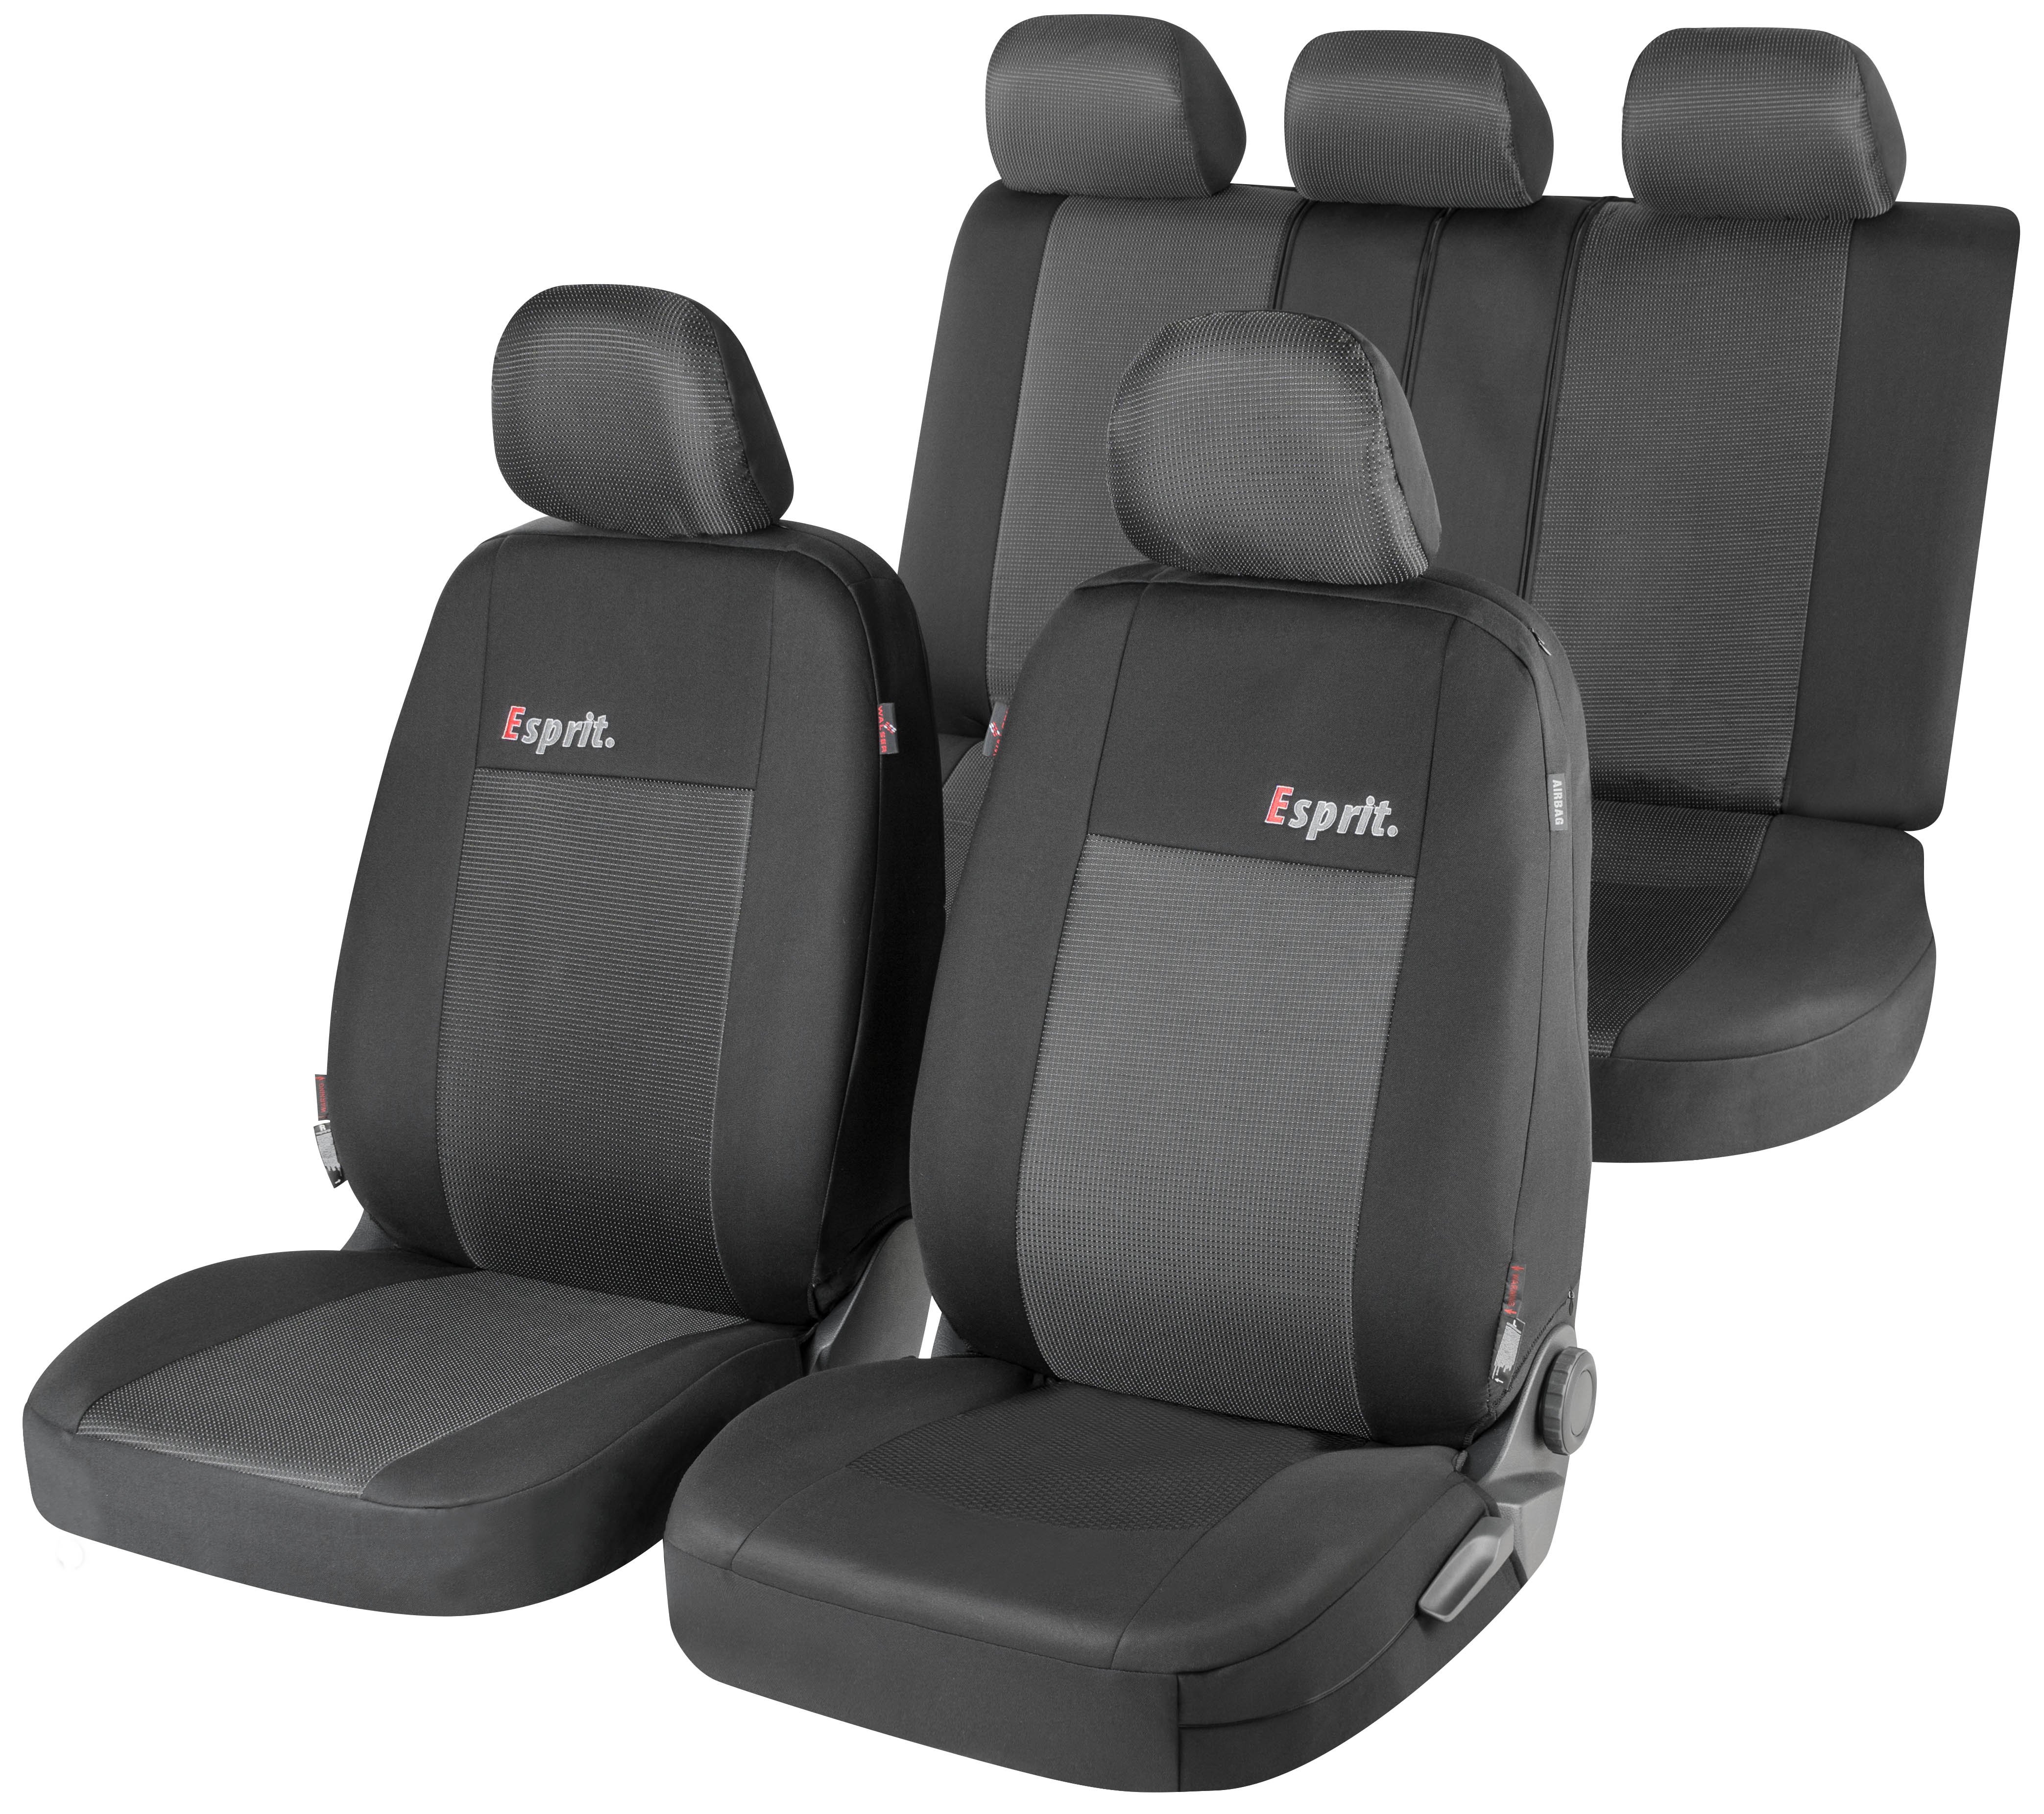 ZIPP IT Premium Esprit car Seat covers with zip system